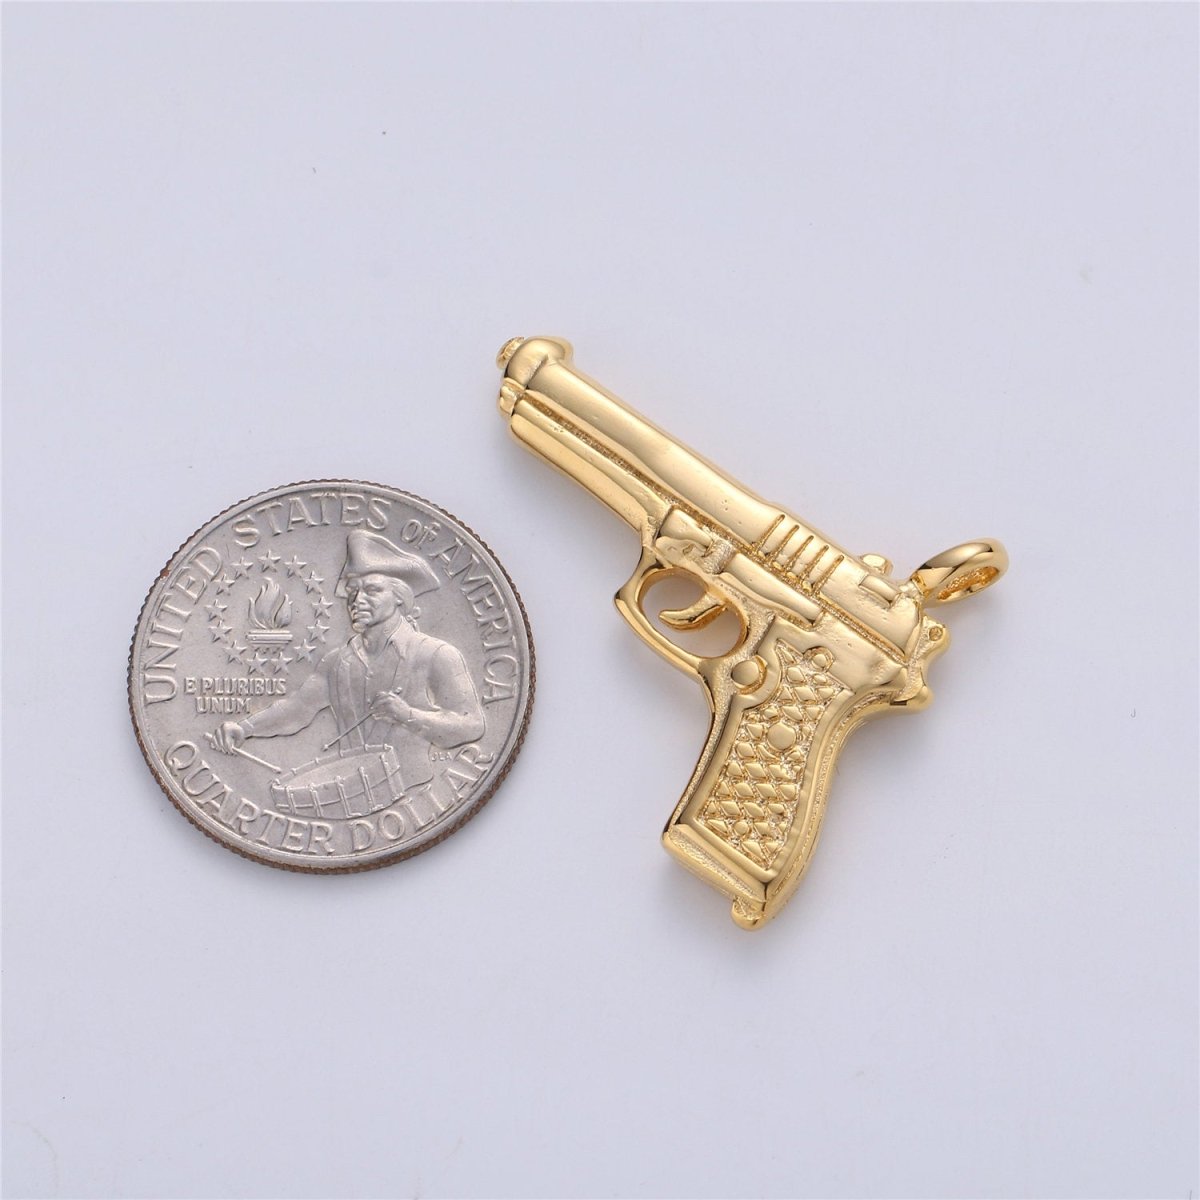 Gold Filled Desert Eagle Pistol Charm Silver Gun Pendant for Earring Necklace Jewelry Making Supplies 34mx27mm J-708 J-709 - DLUXCA